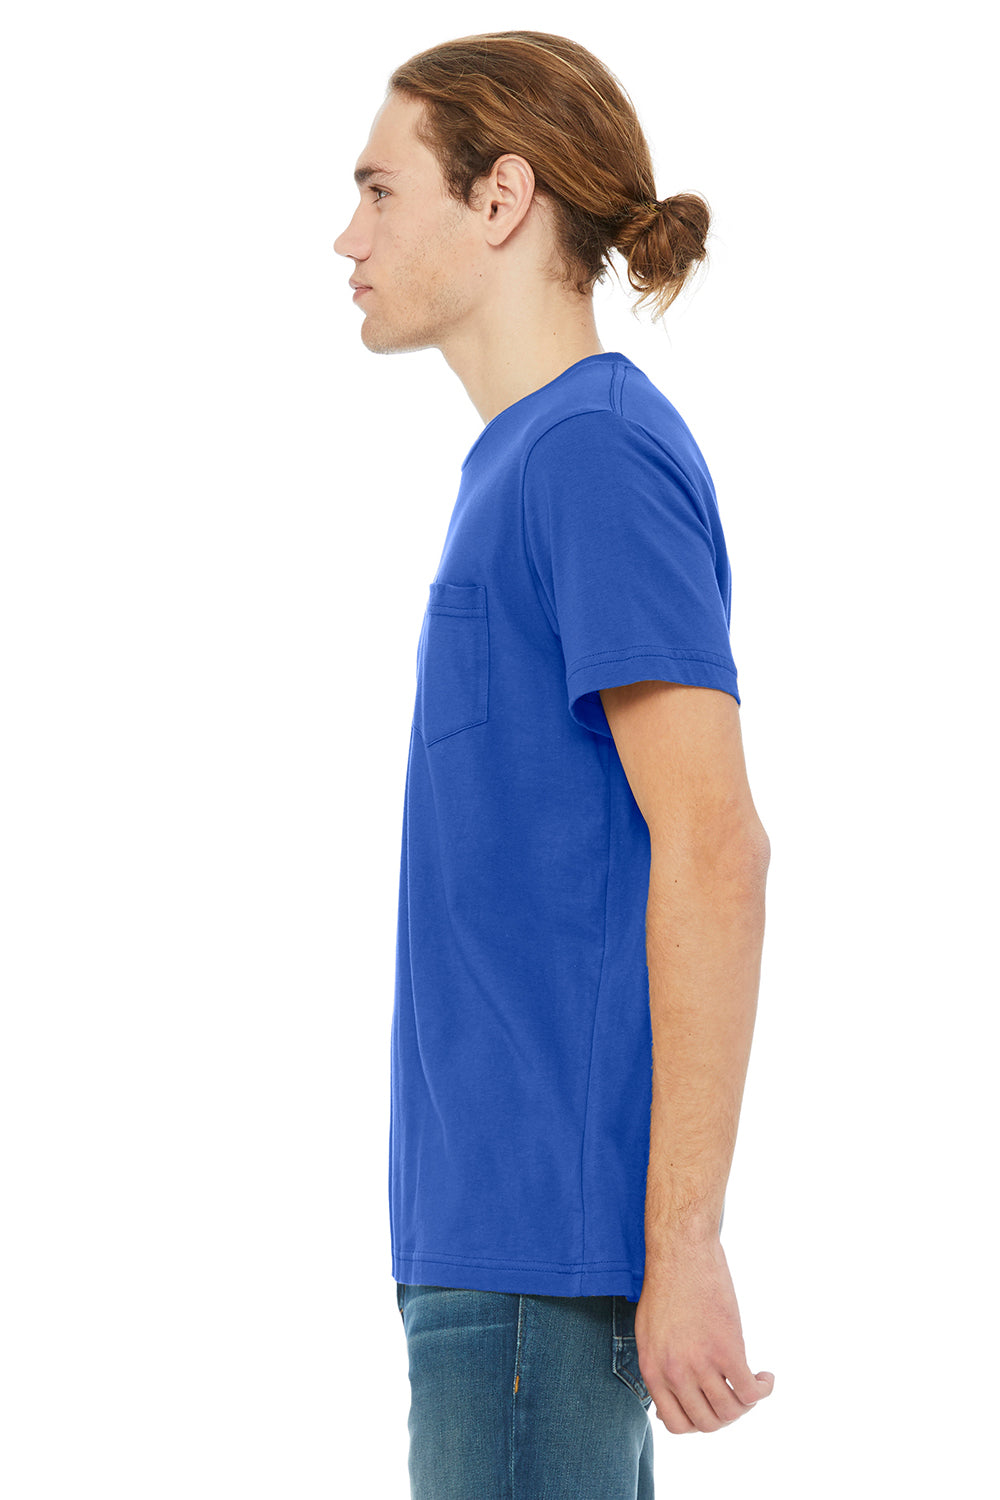 Bella + Canvas 3021 Mens Jersey Short Sleeve Crewneck T-Shirt w/ Pocket Royal Blue Side